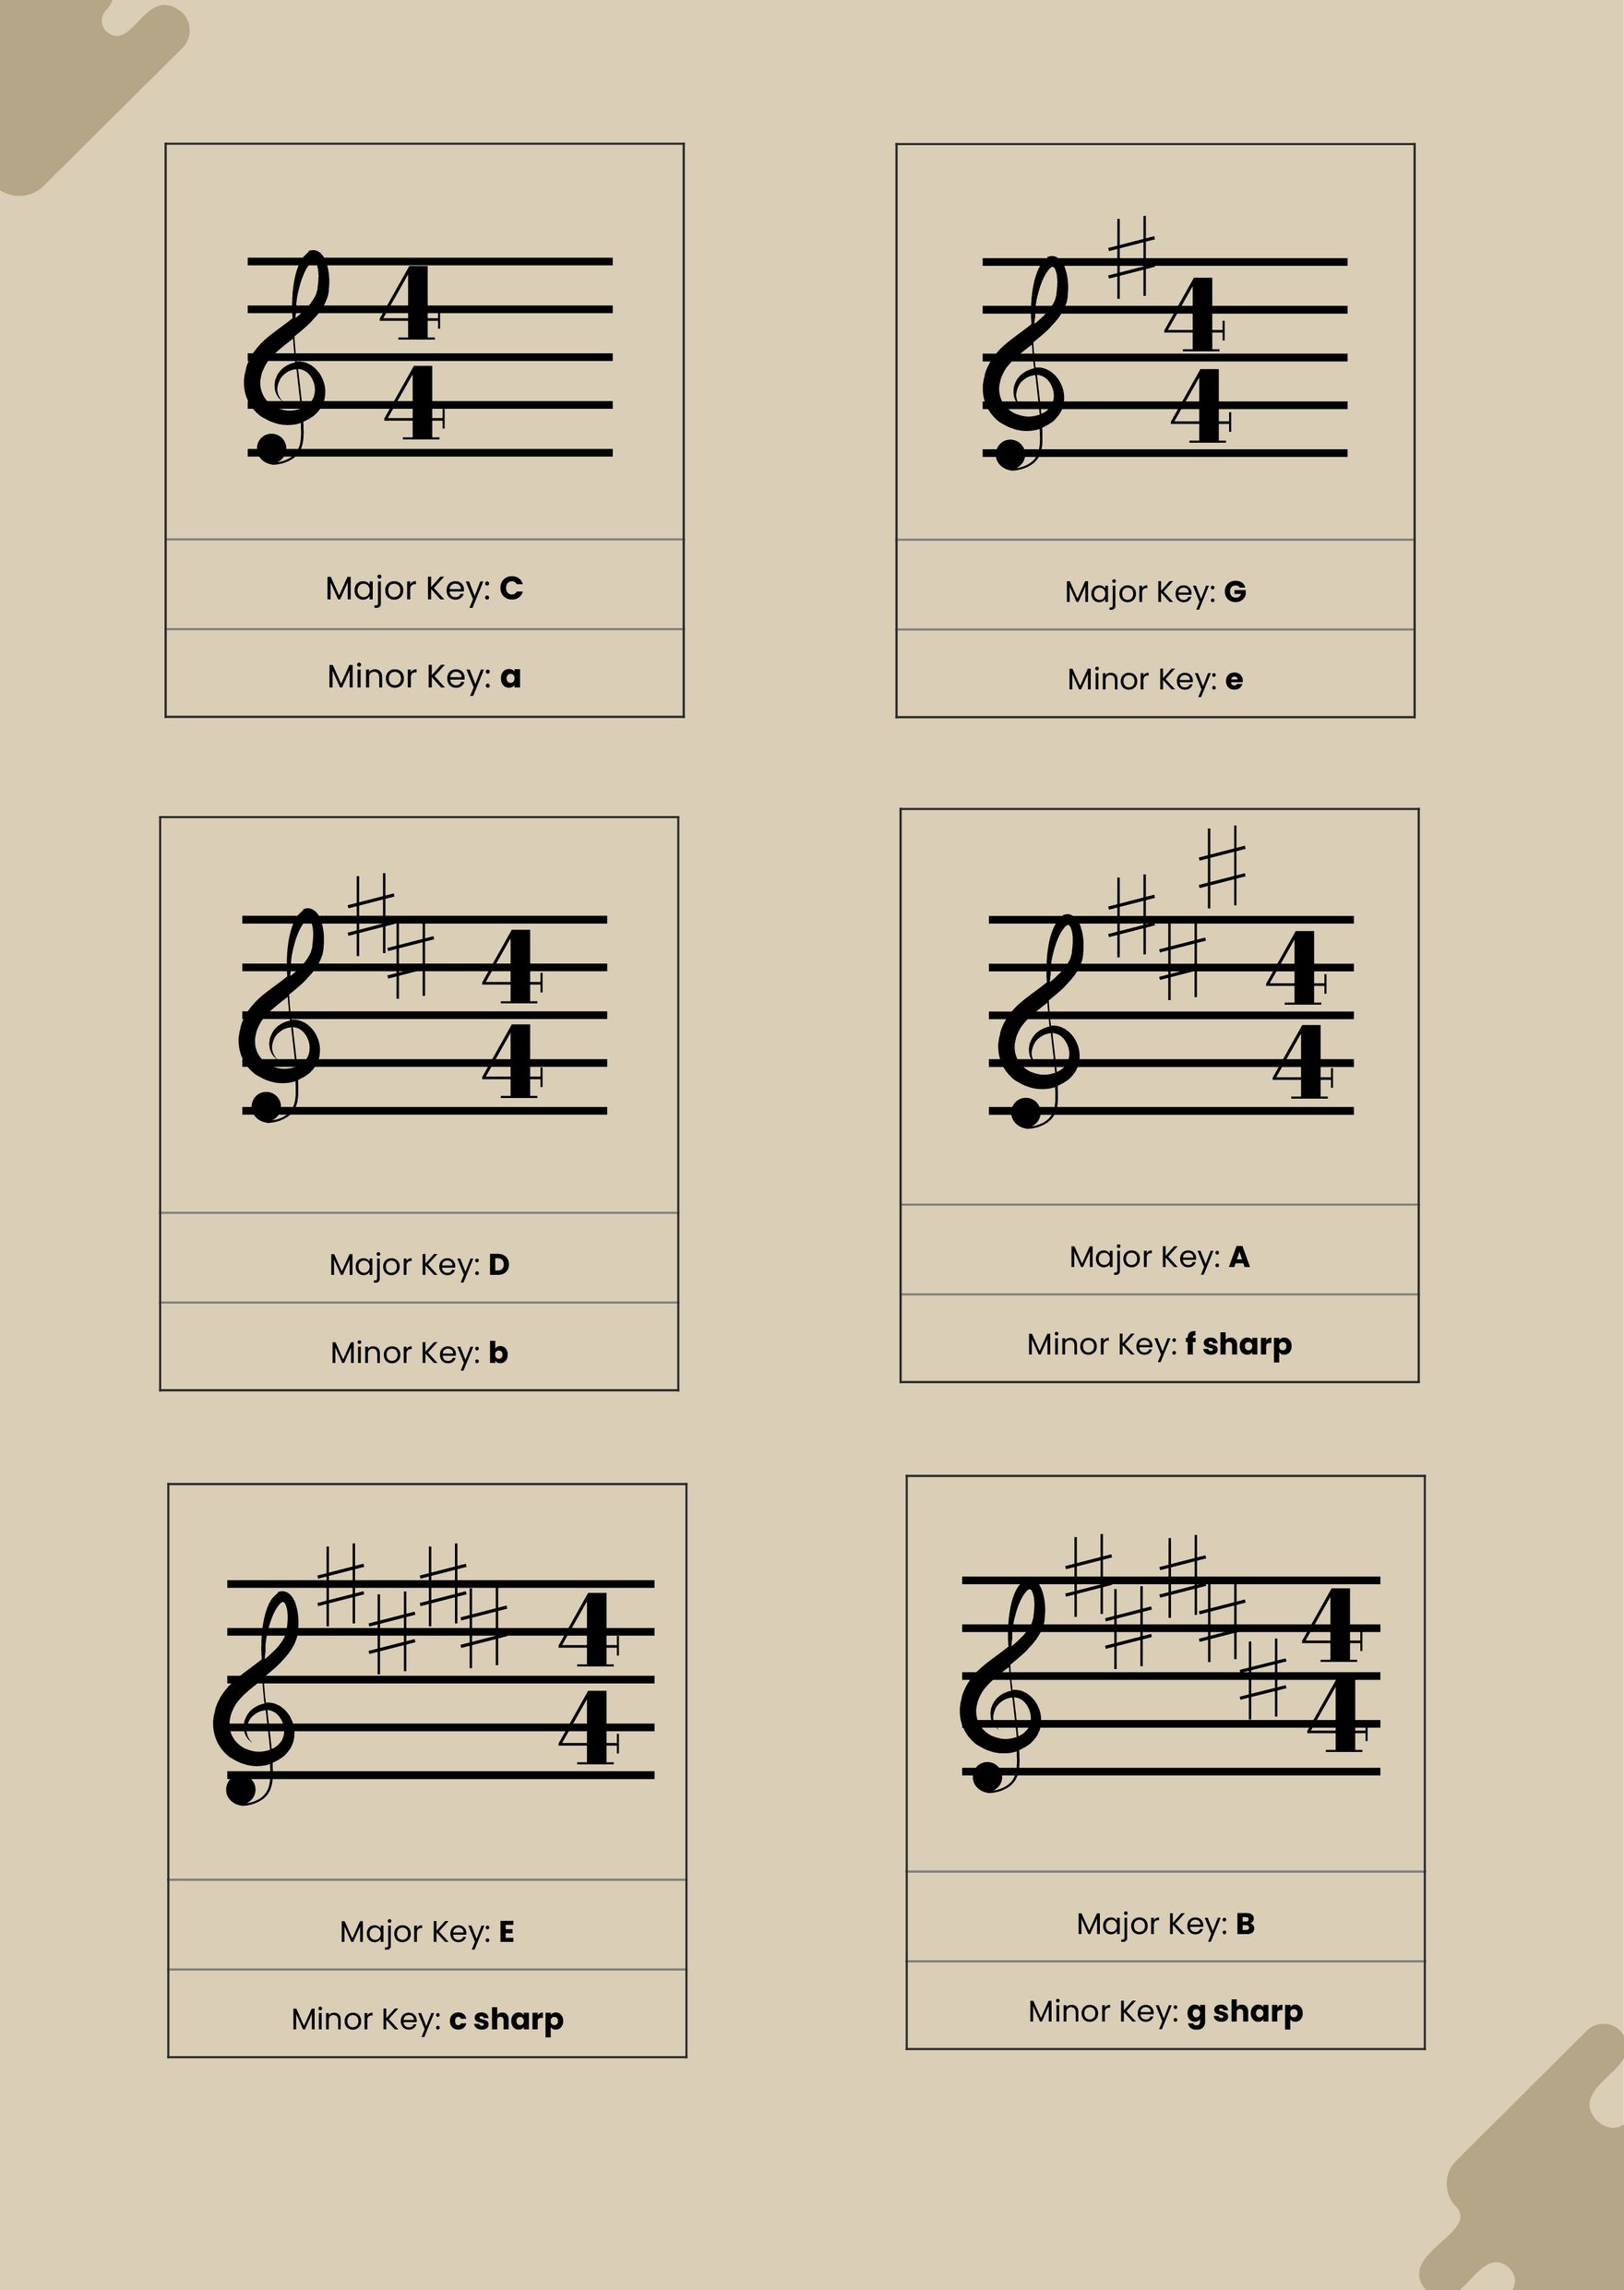 piano-key-signature-chart-in-illustrator-pdf-download-template